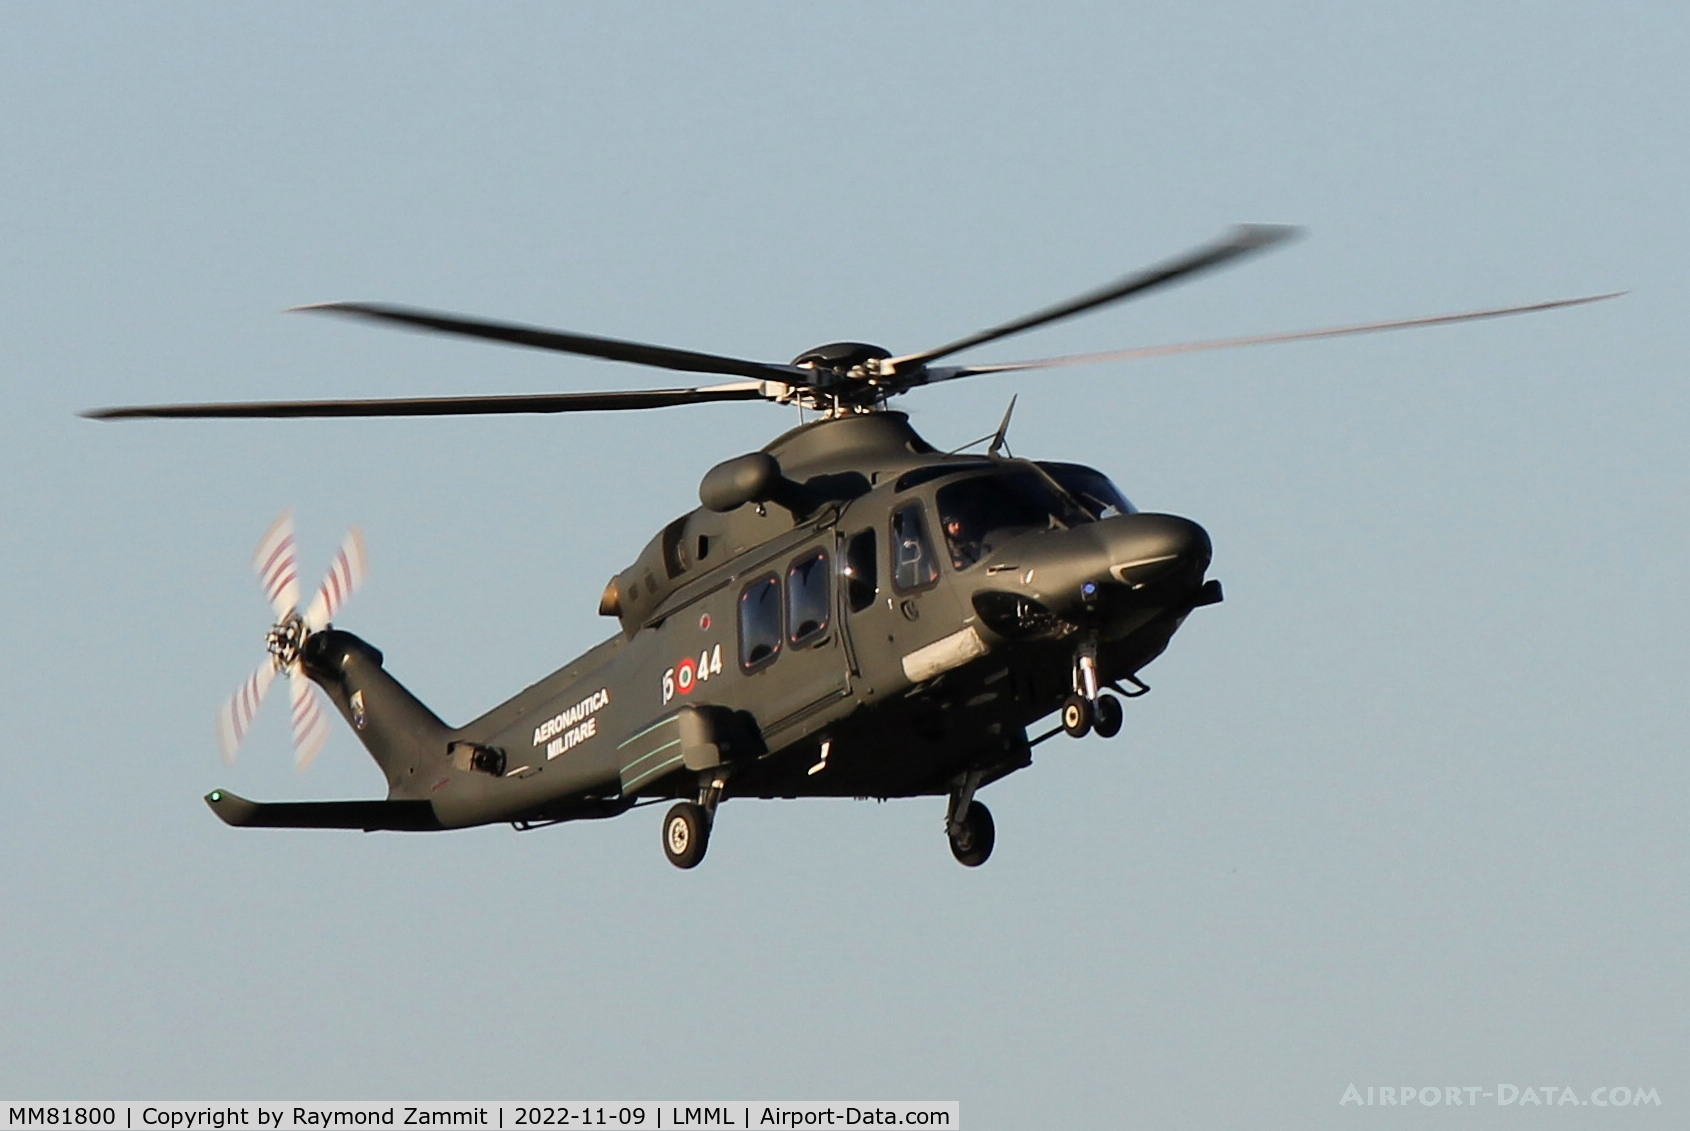 MM81800, 2014 AgustaWestland HH-139A C/N 31434, Agusta Westland HH-139A MM81800 Italian Air Force